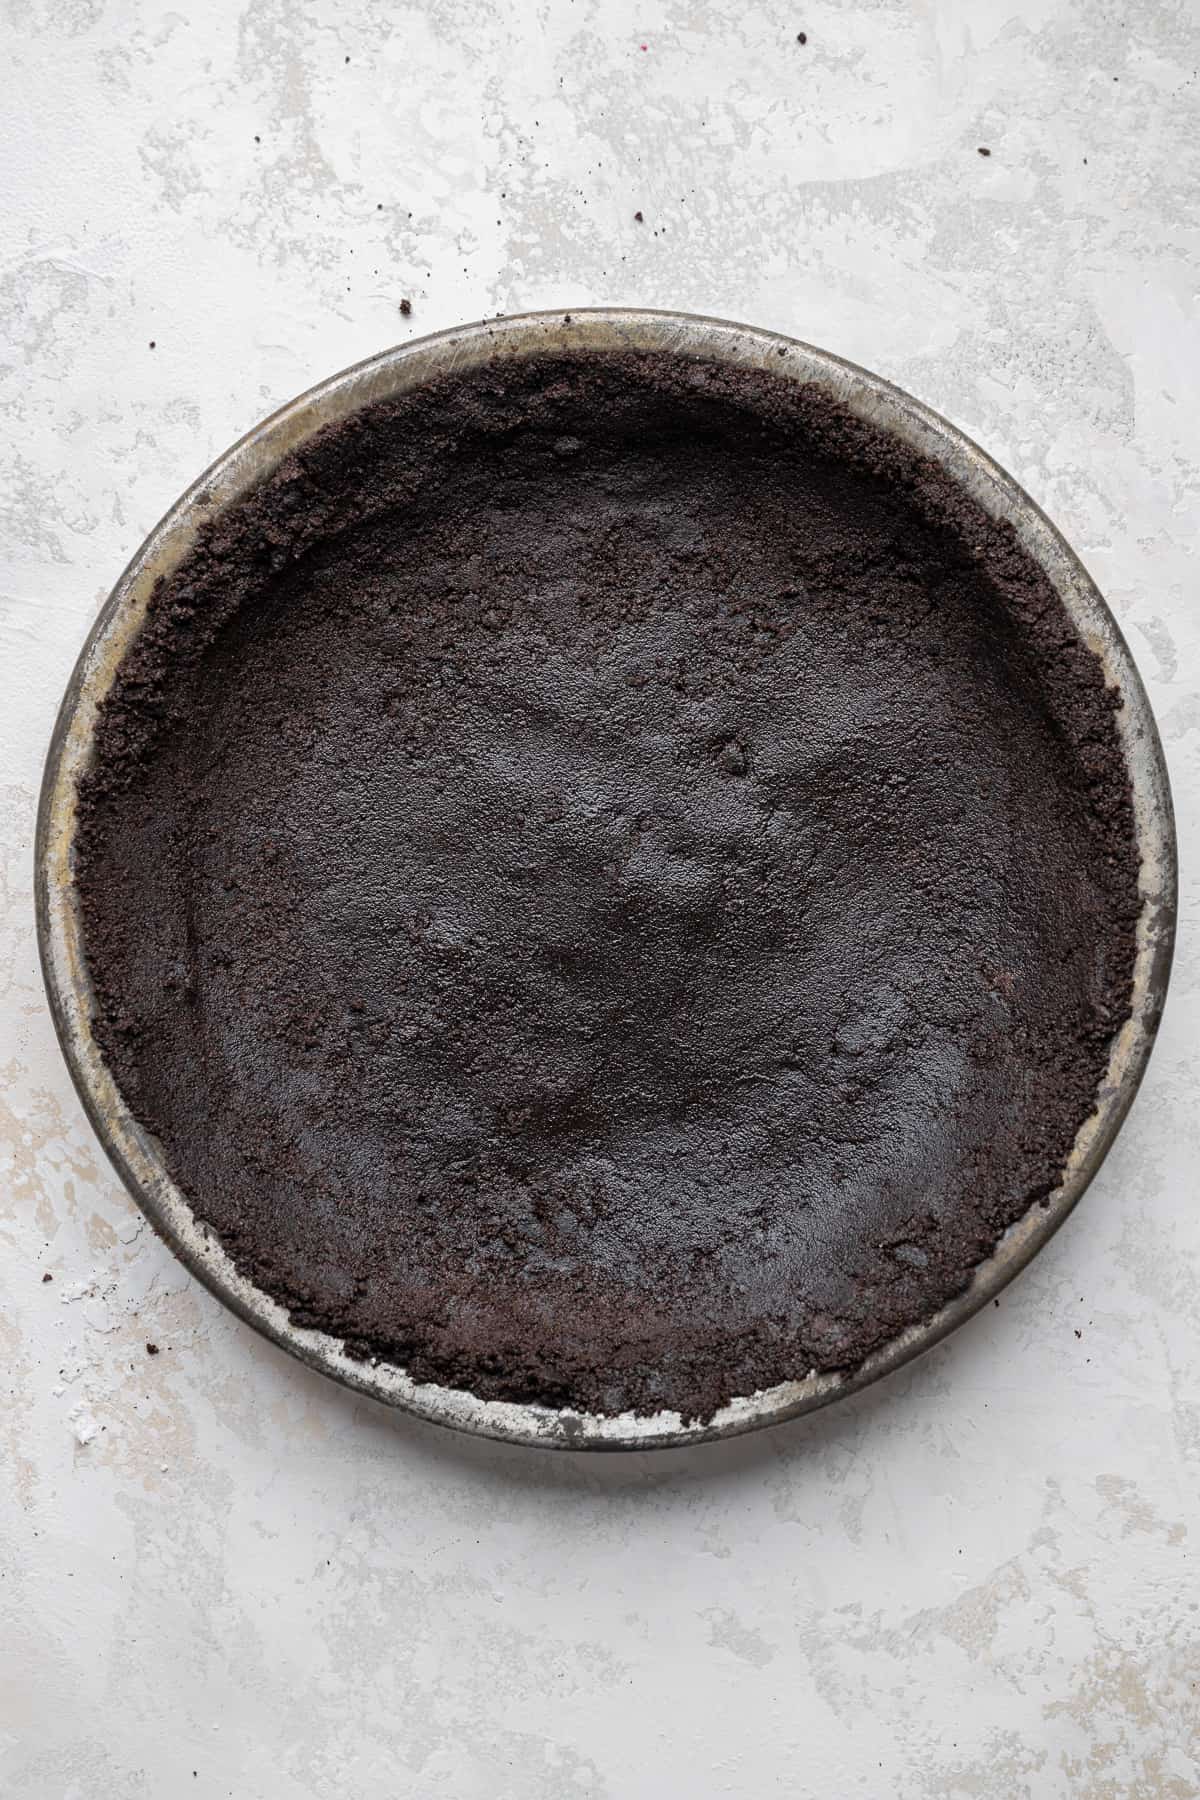 Oreo crust pressed into a pie pan